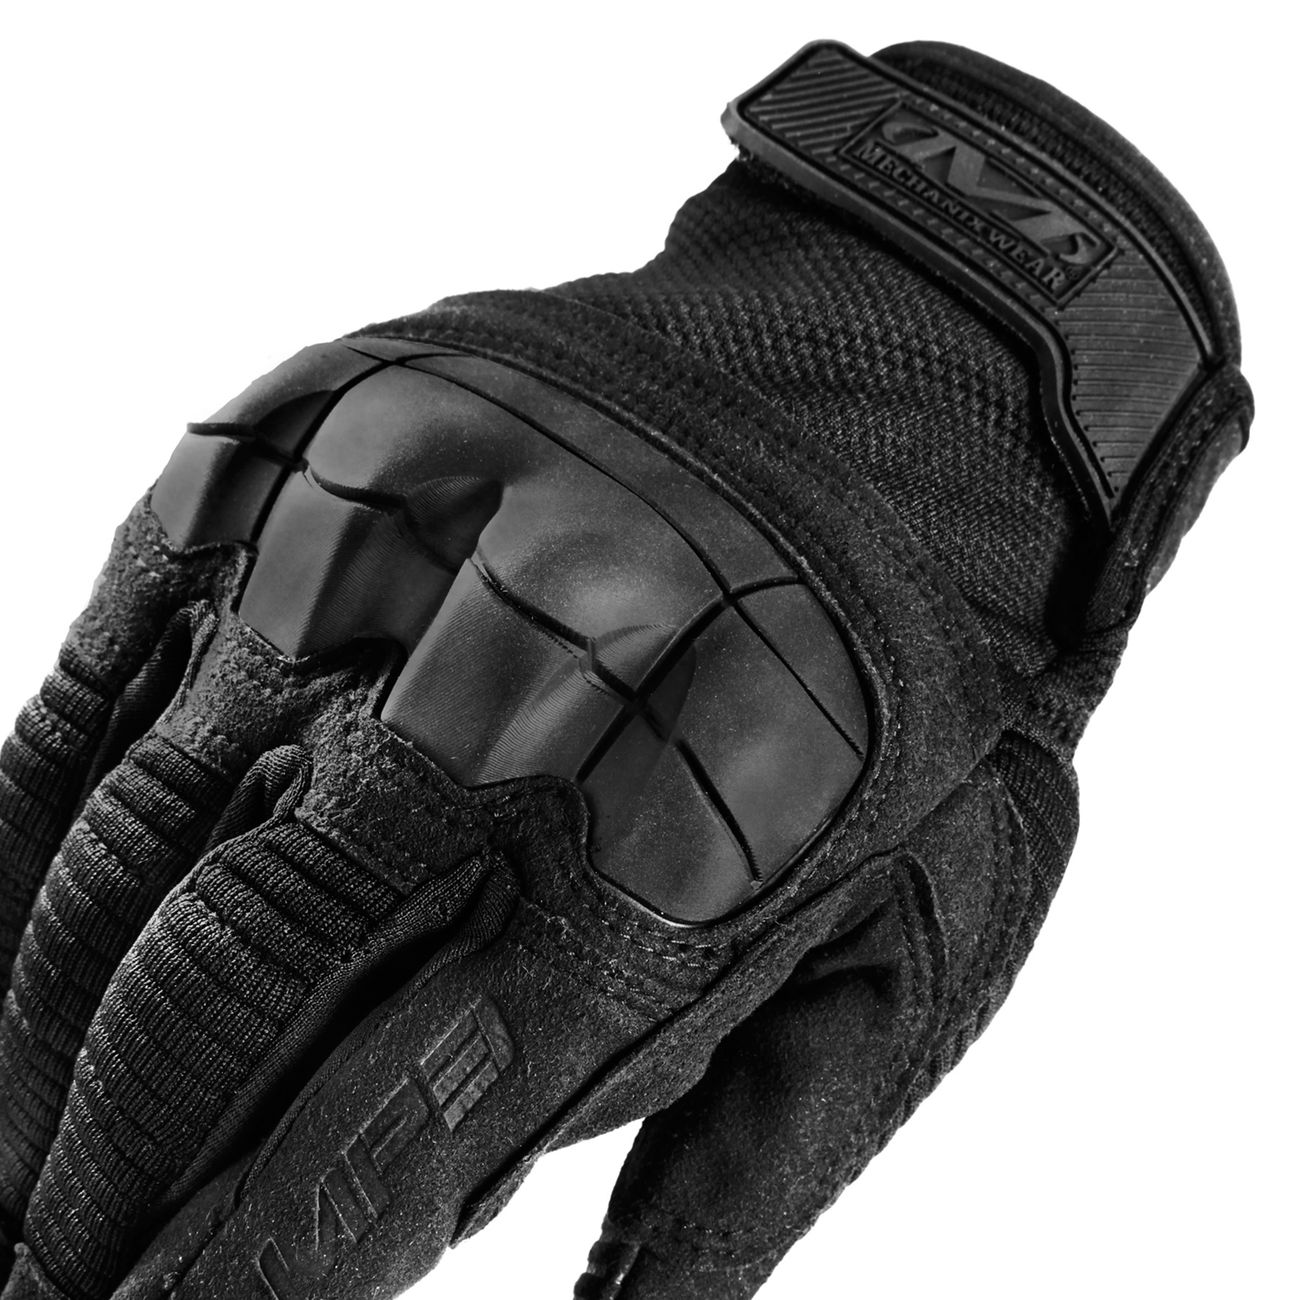 Mechanix Wear M-Pact 3 Handschuhe schwarz Bild 1